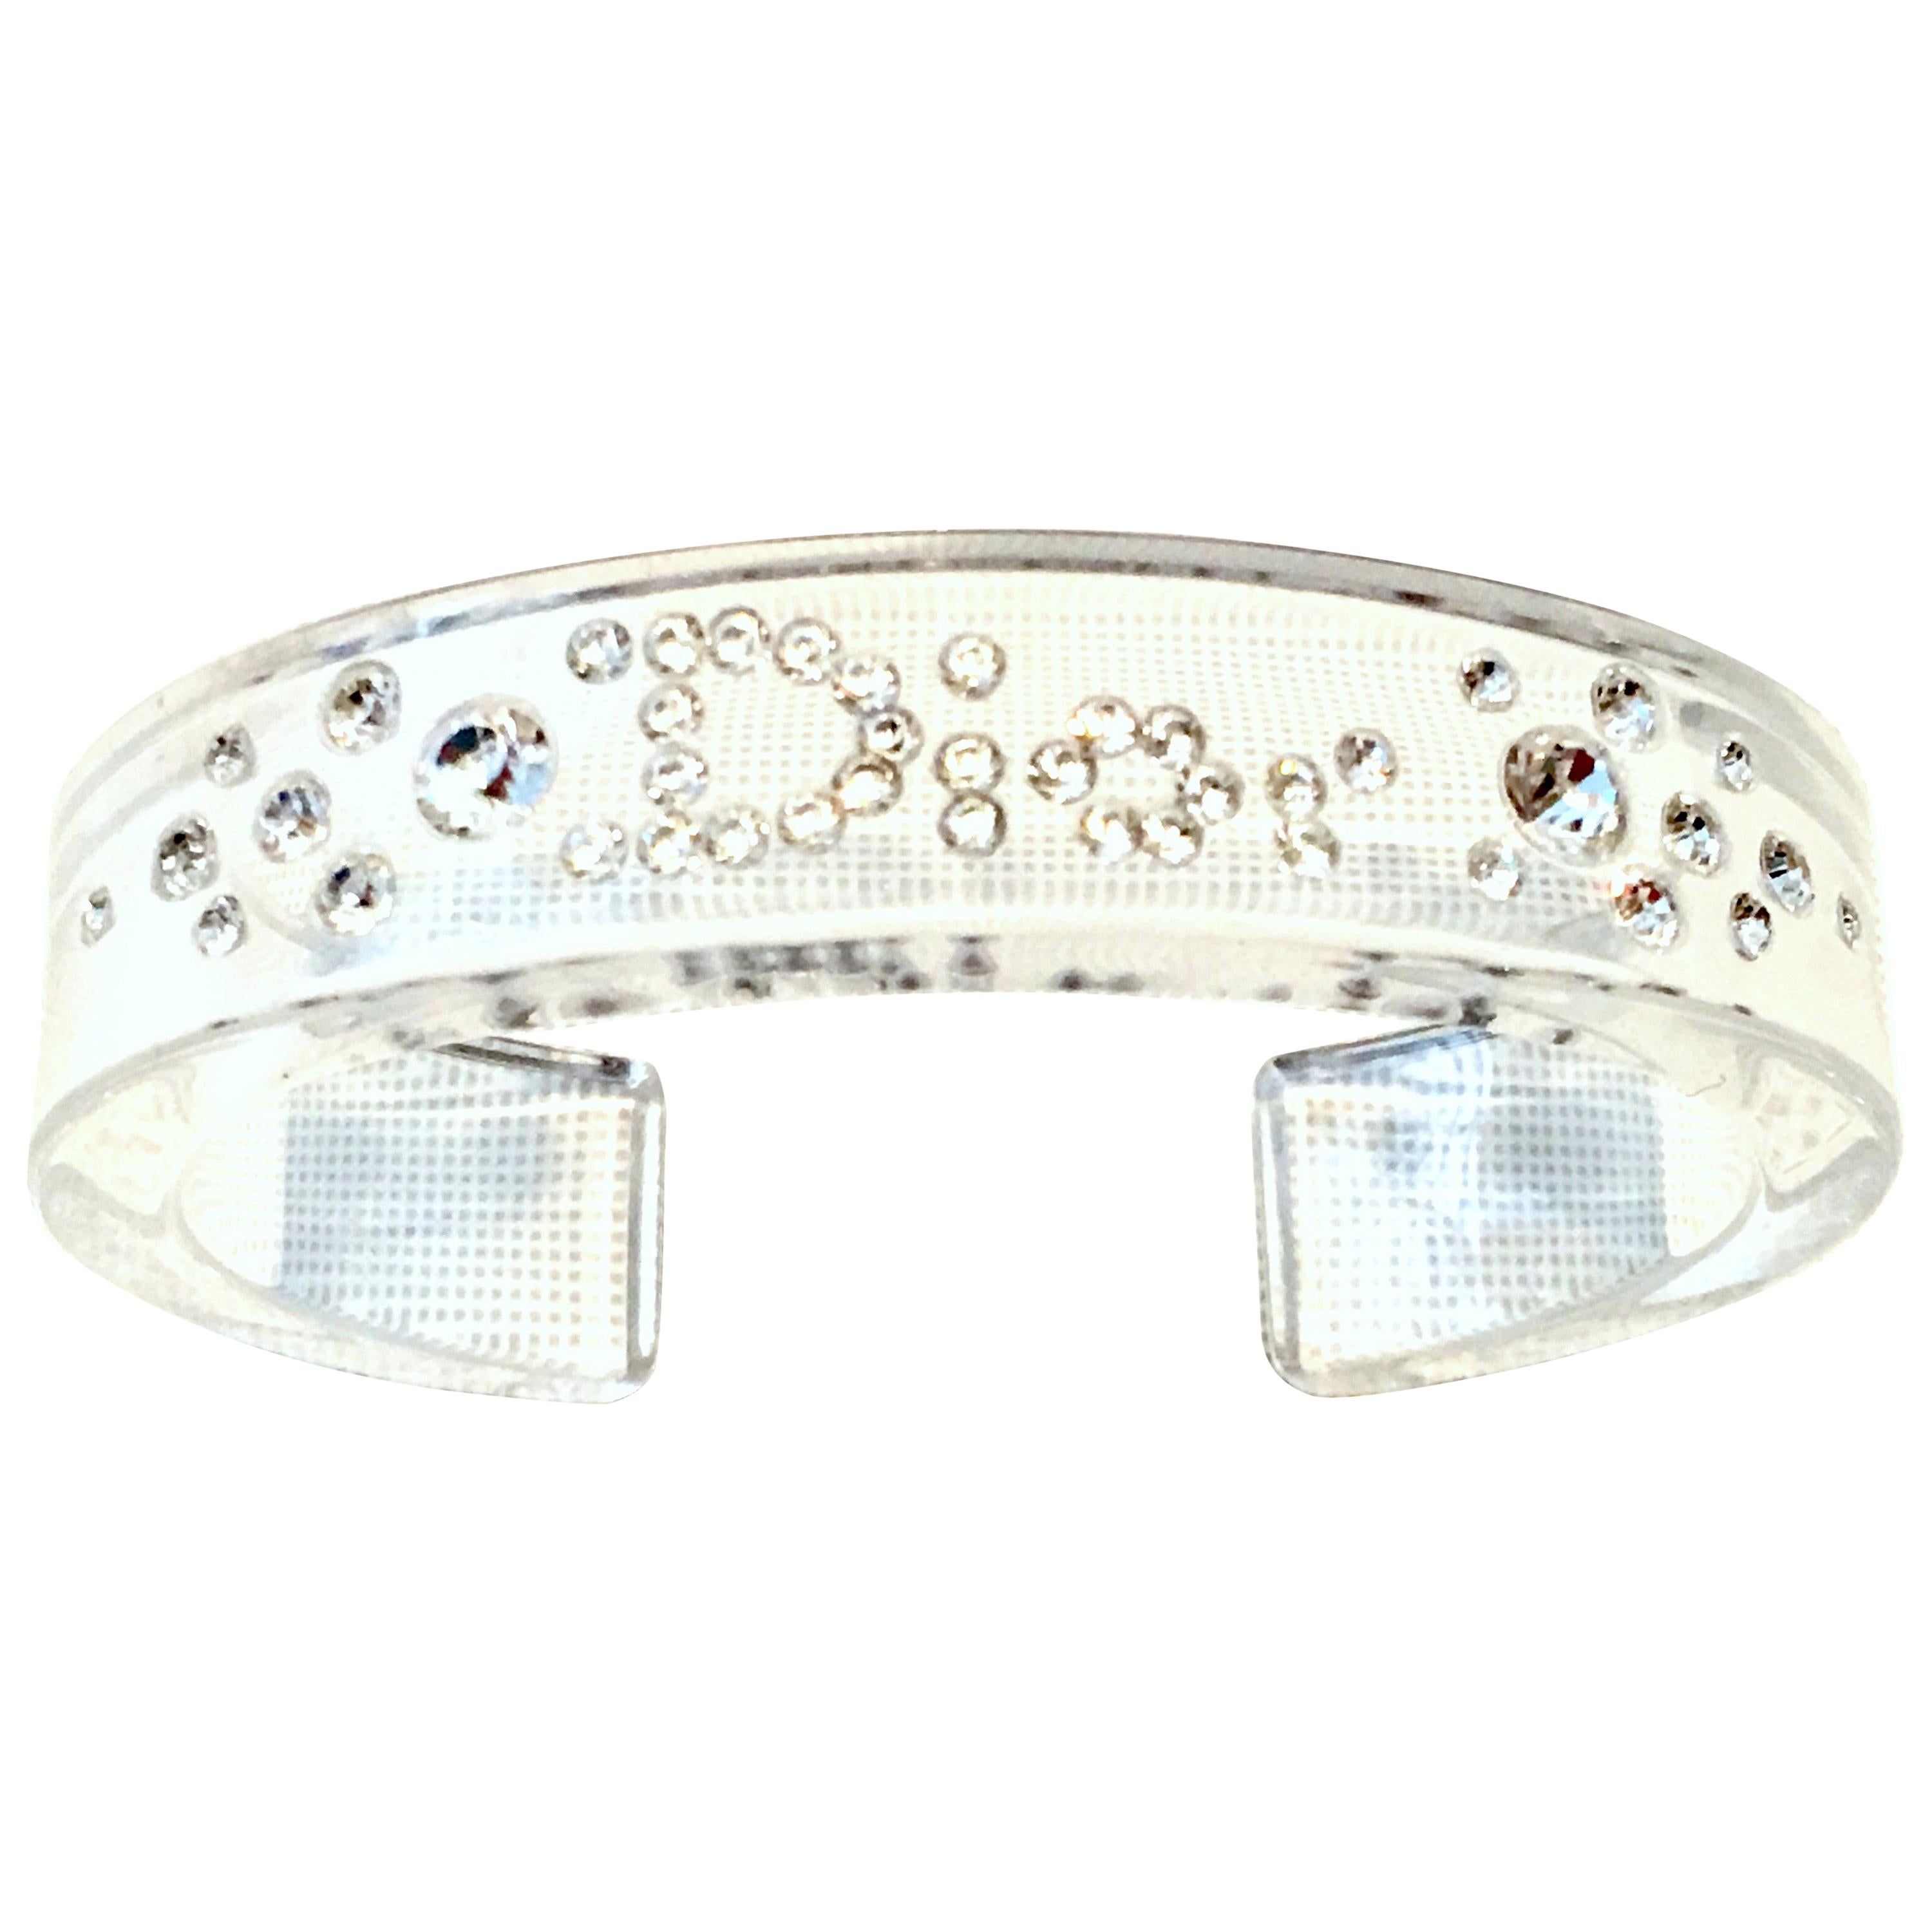 20th Century Lucite & Swarovski Crystal "DIOR" Cuff Bracelet By, Christian Dior